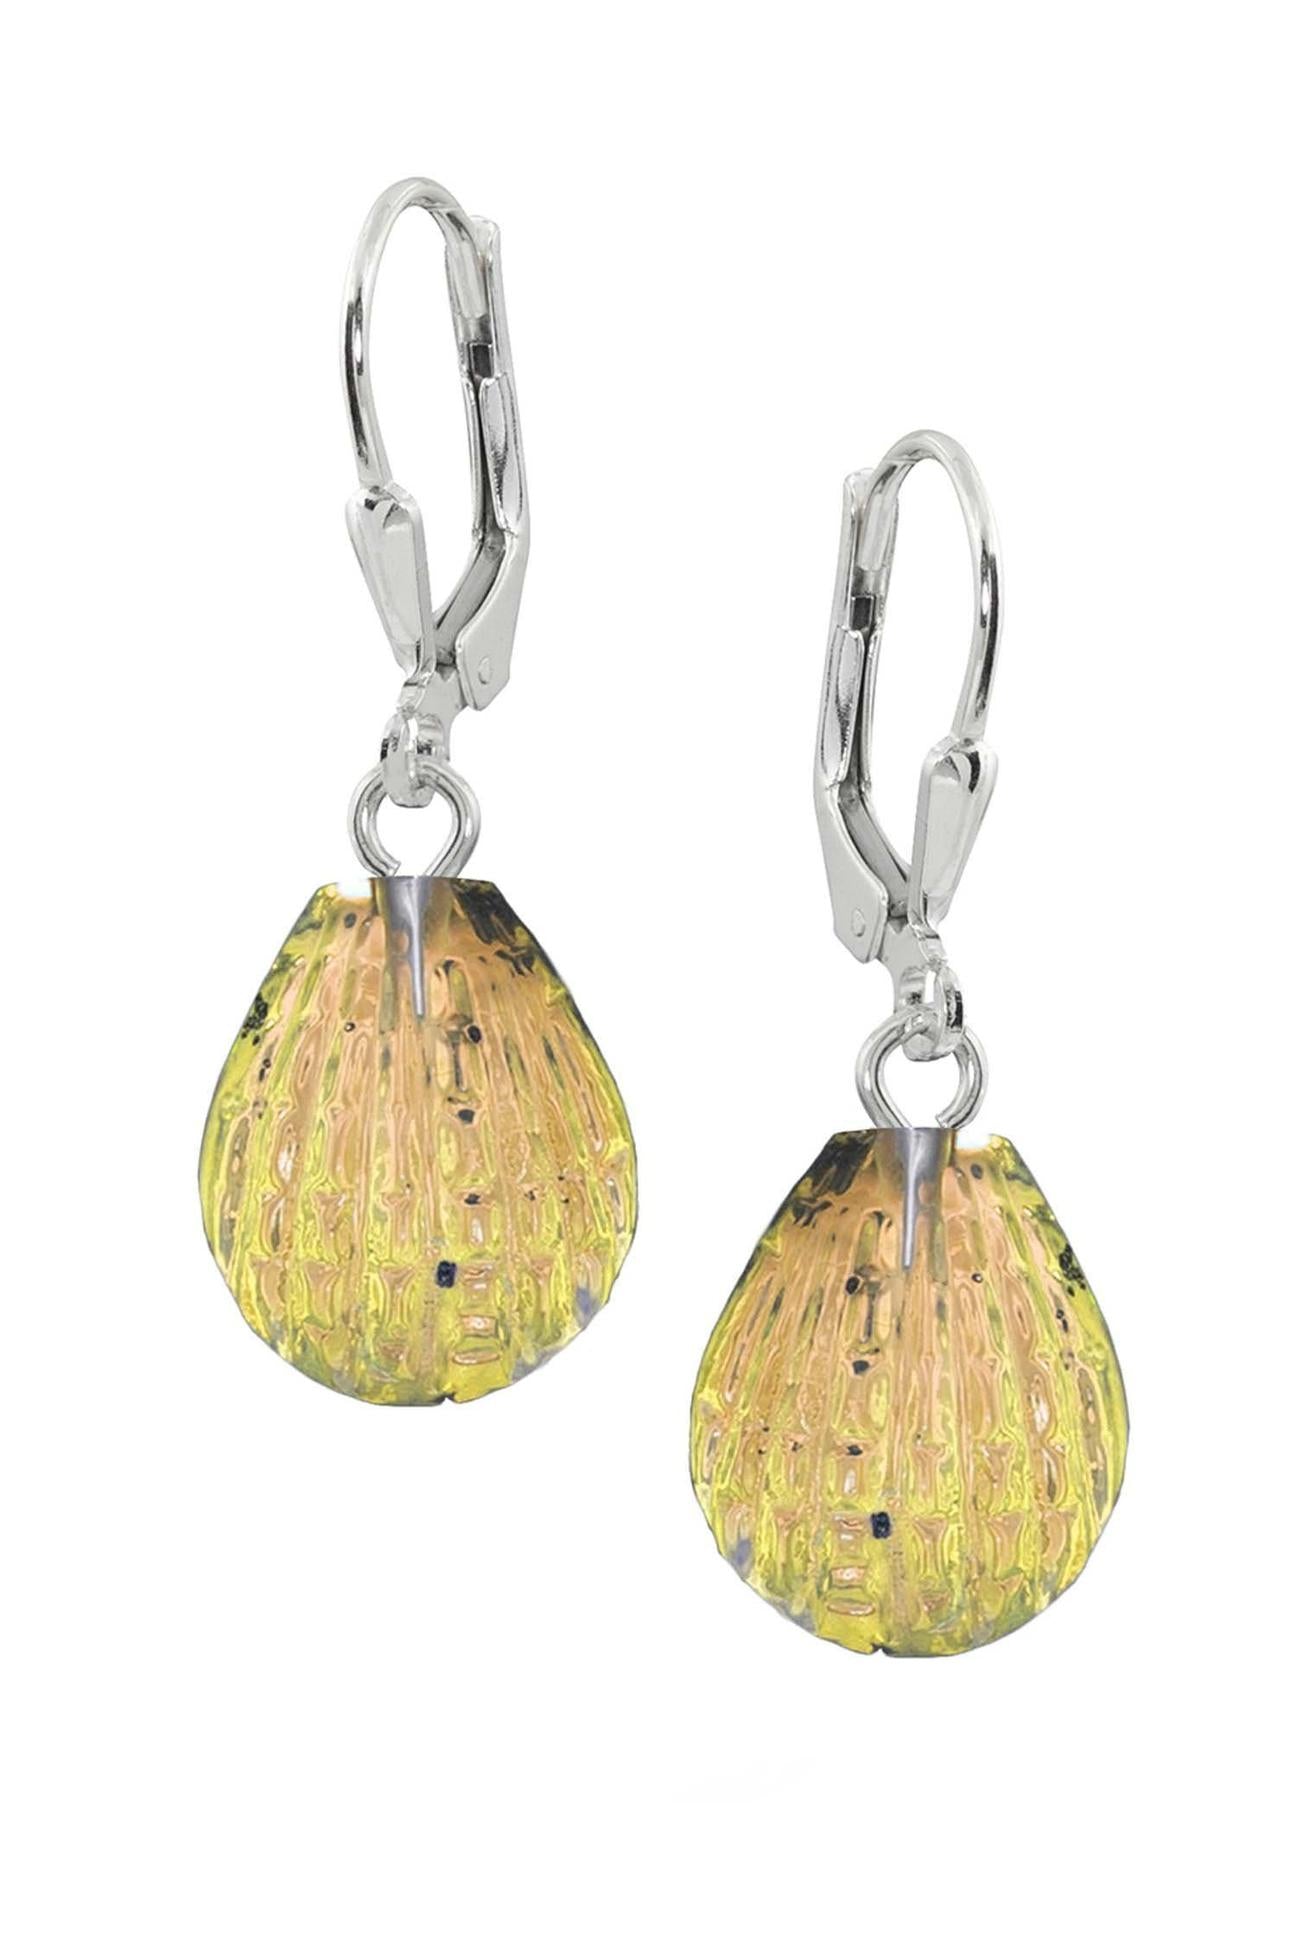 Leightworks Shell Crystal Earrings